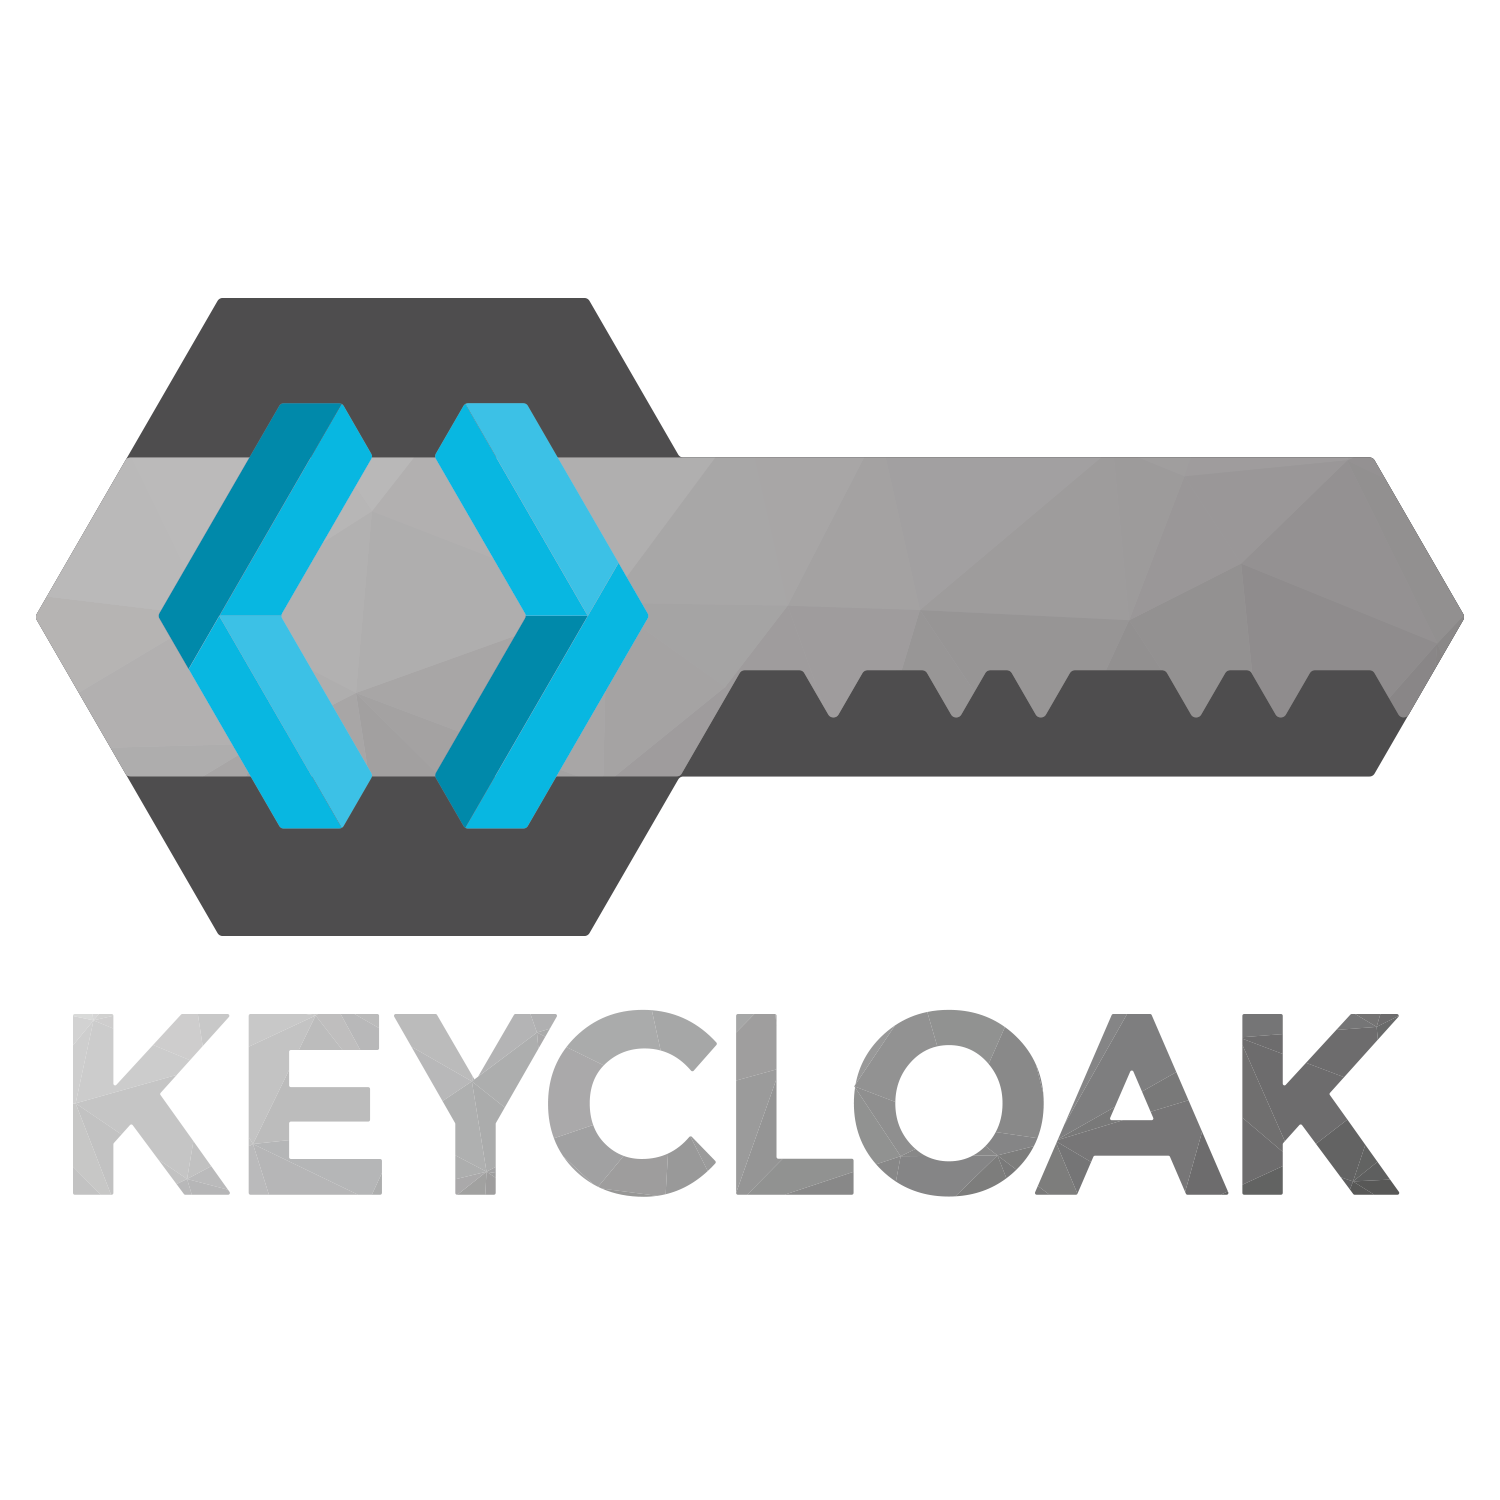 keyclock